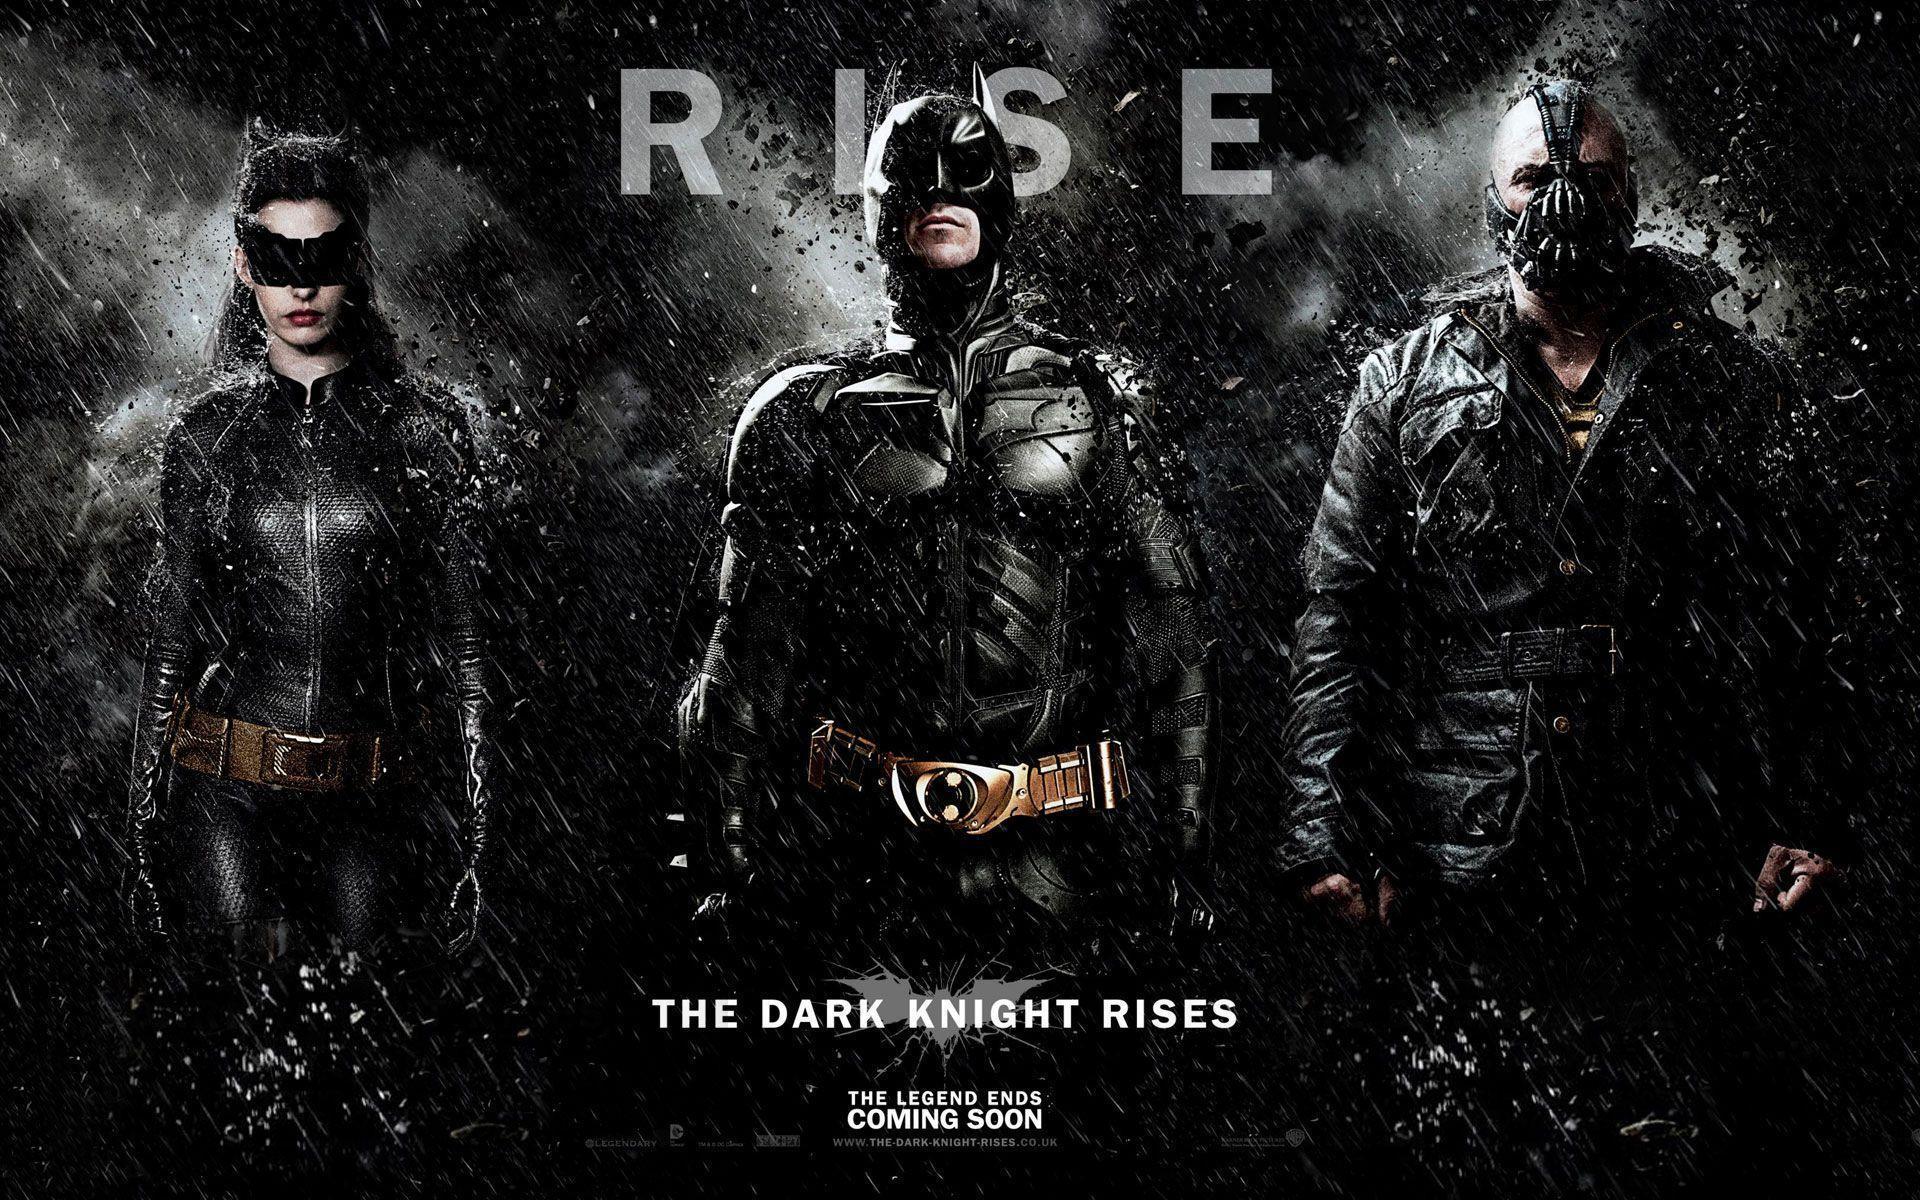 The Dark Knight Rises Wallpaper.biz: Scary Image